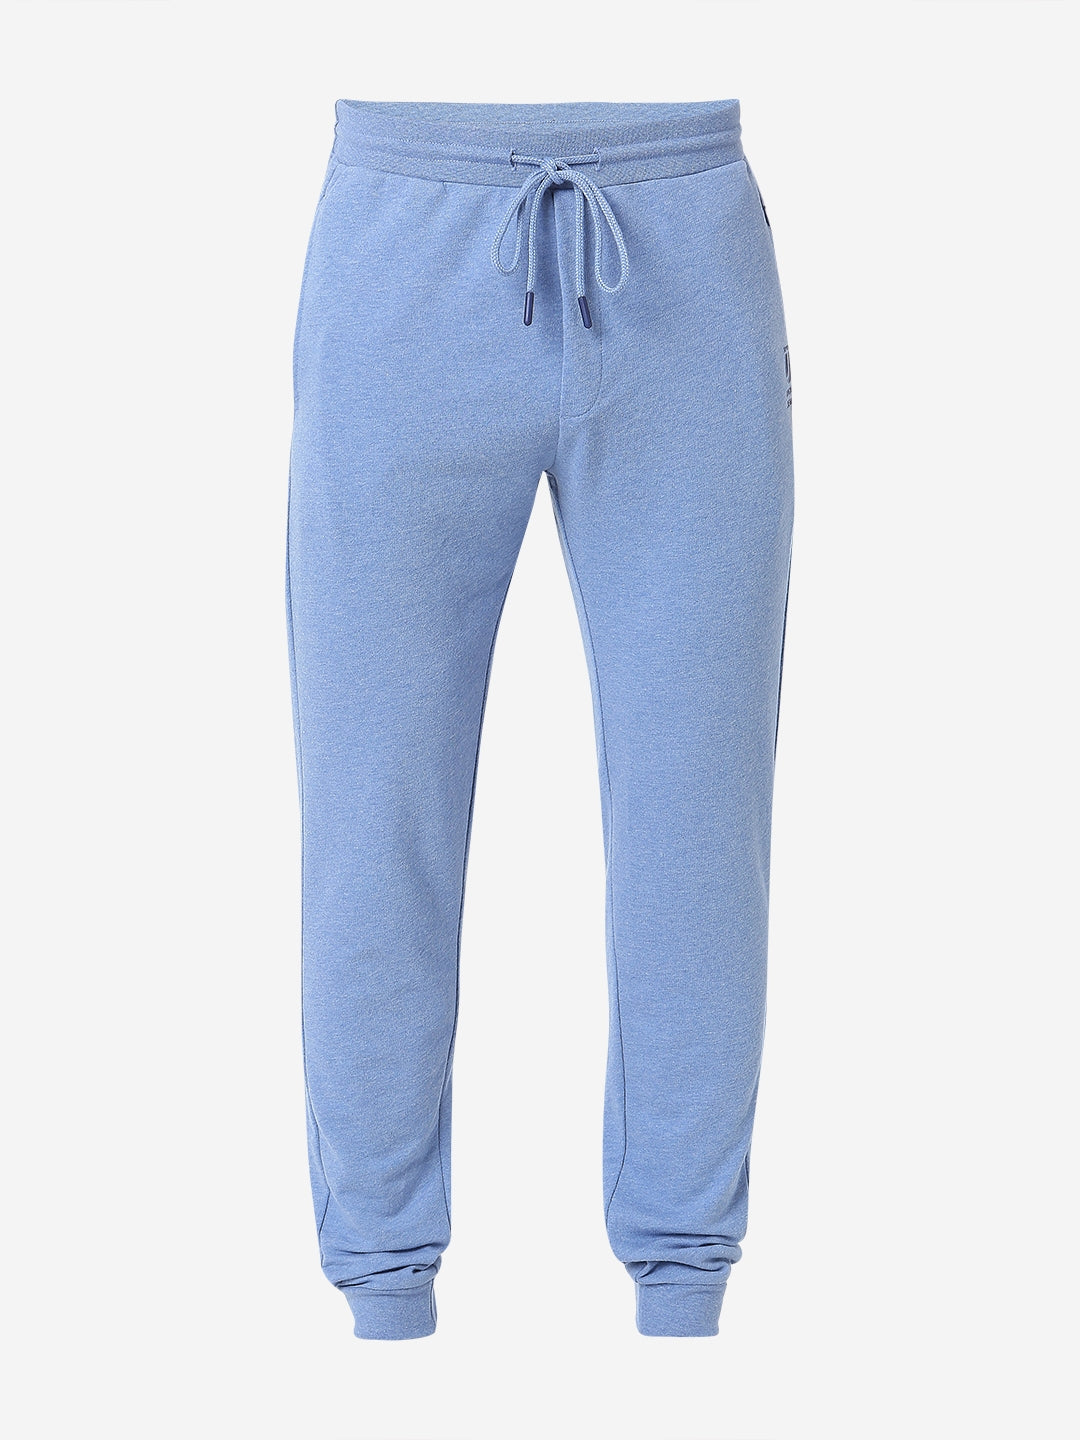 Underjeans by Spykar Men Premium Knitted Blue Melange Track Pant